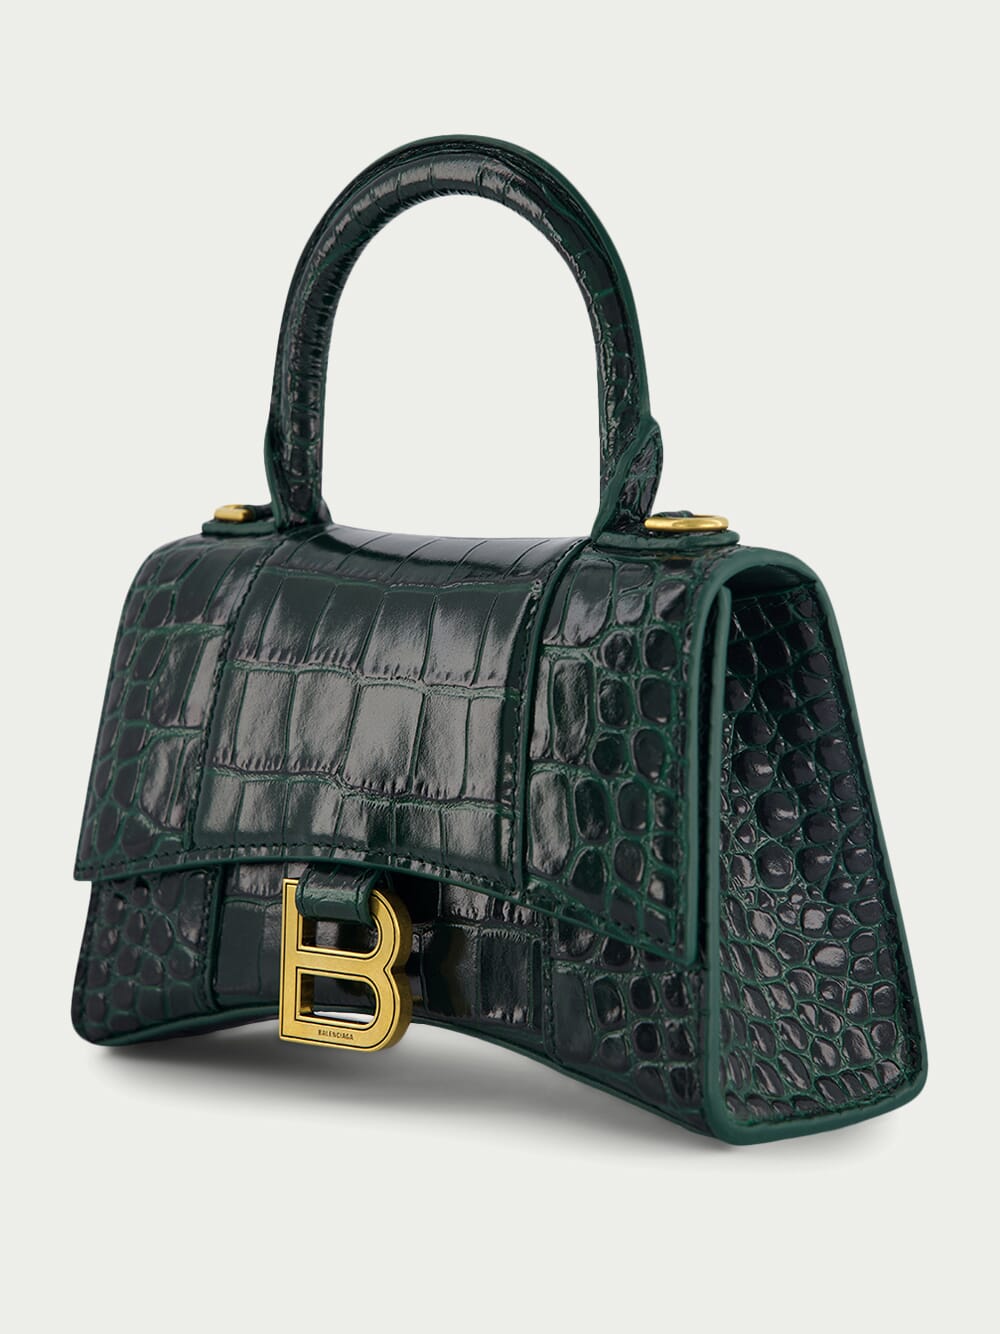 BalenciagaHourglass XS Handbag at Fashion Clinic